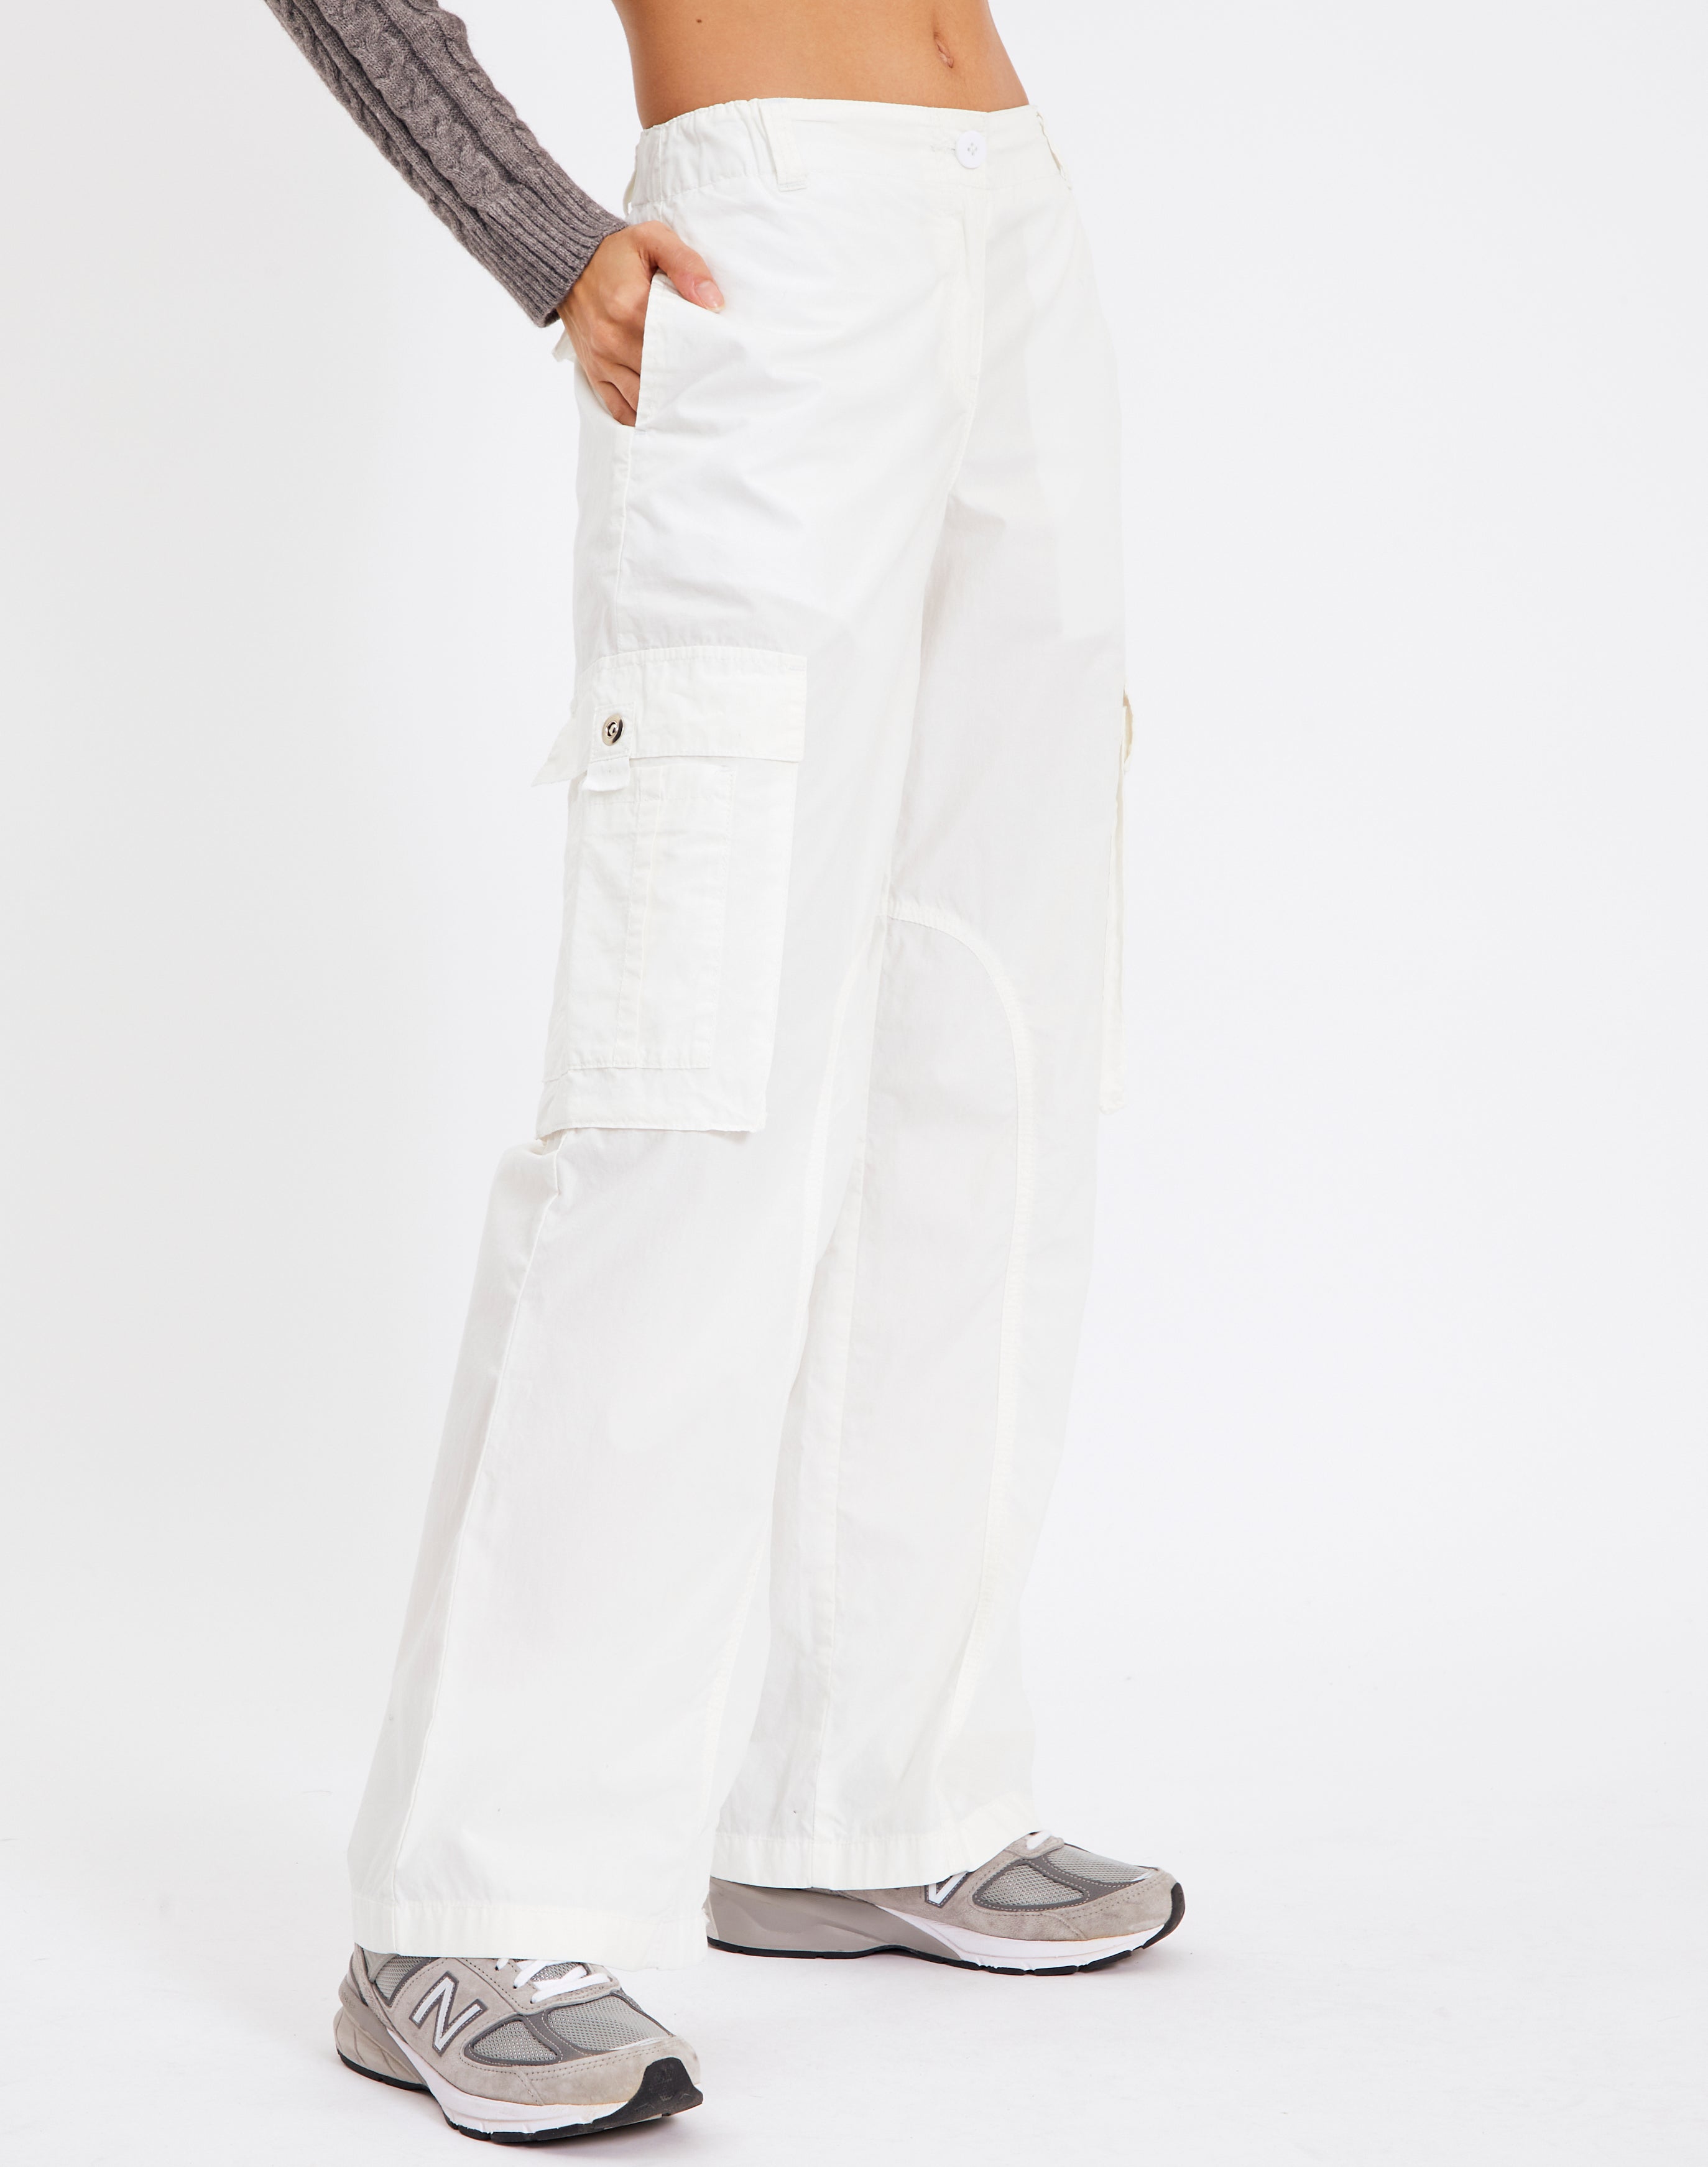 White Cotton Cargo Pants | vlr.eng.br